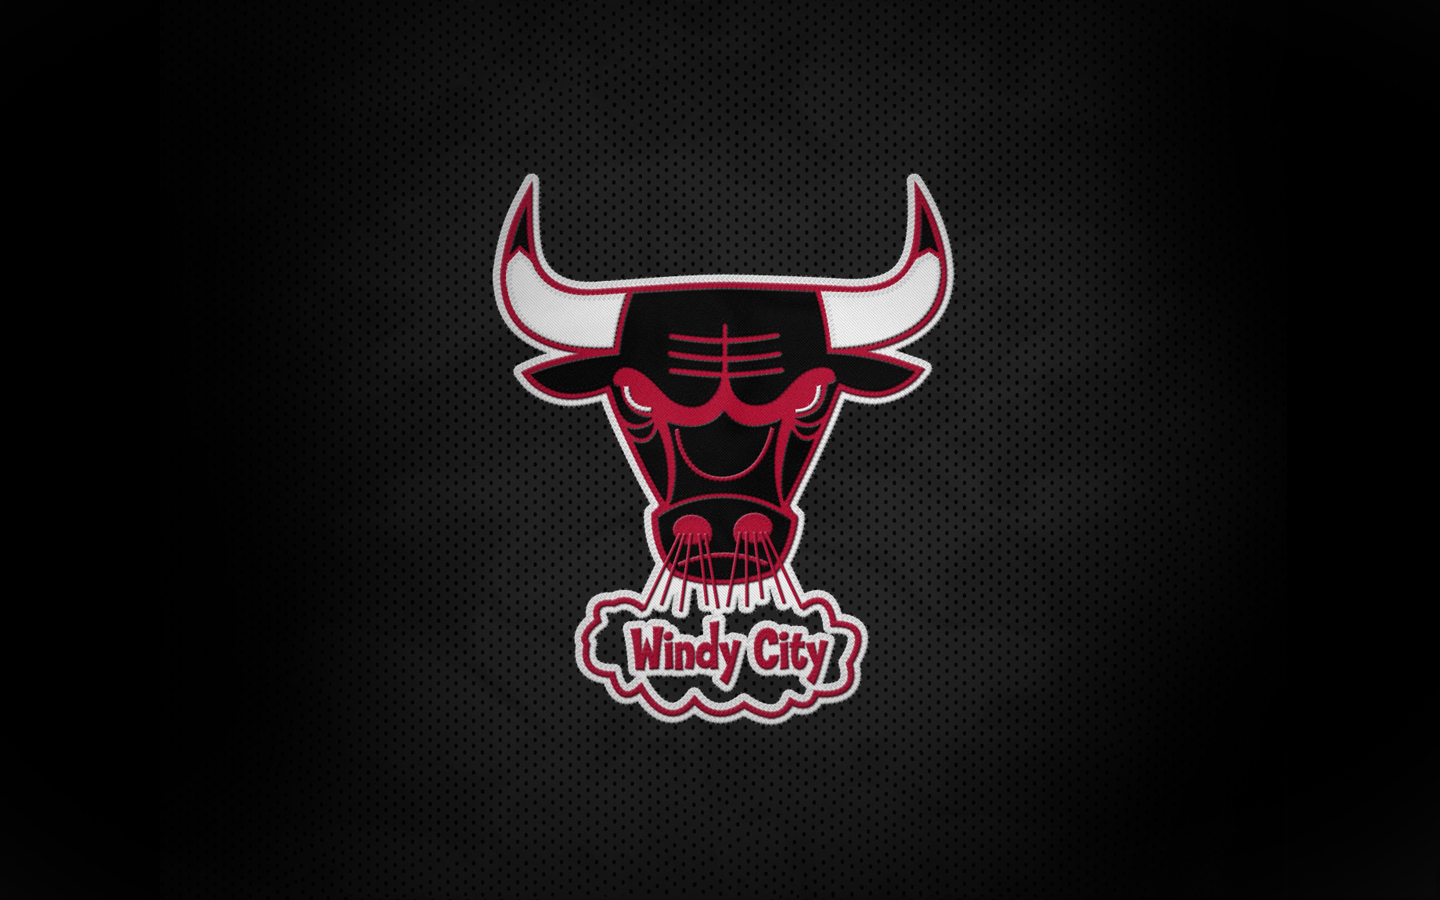 Chicago Bulls Wallpaper Background